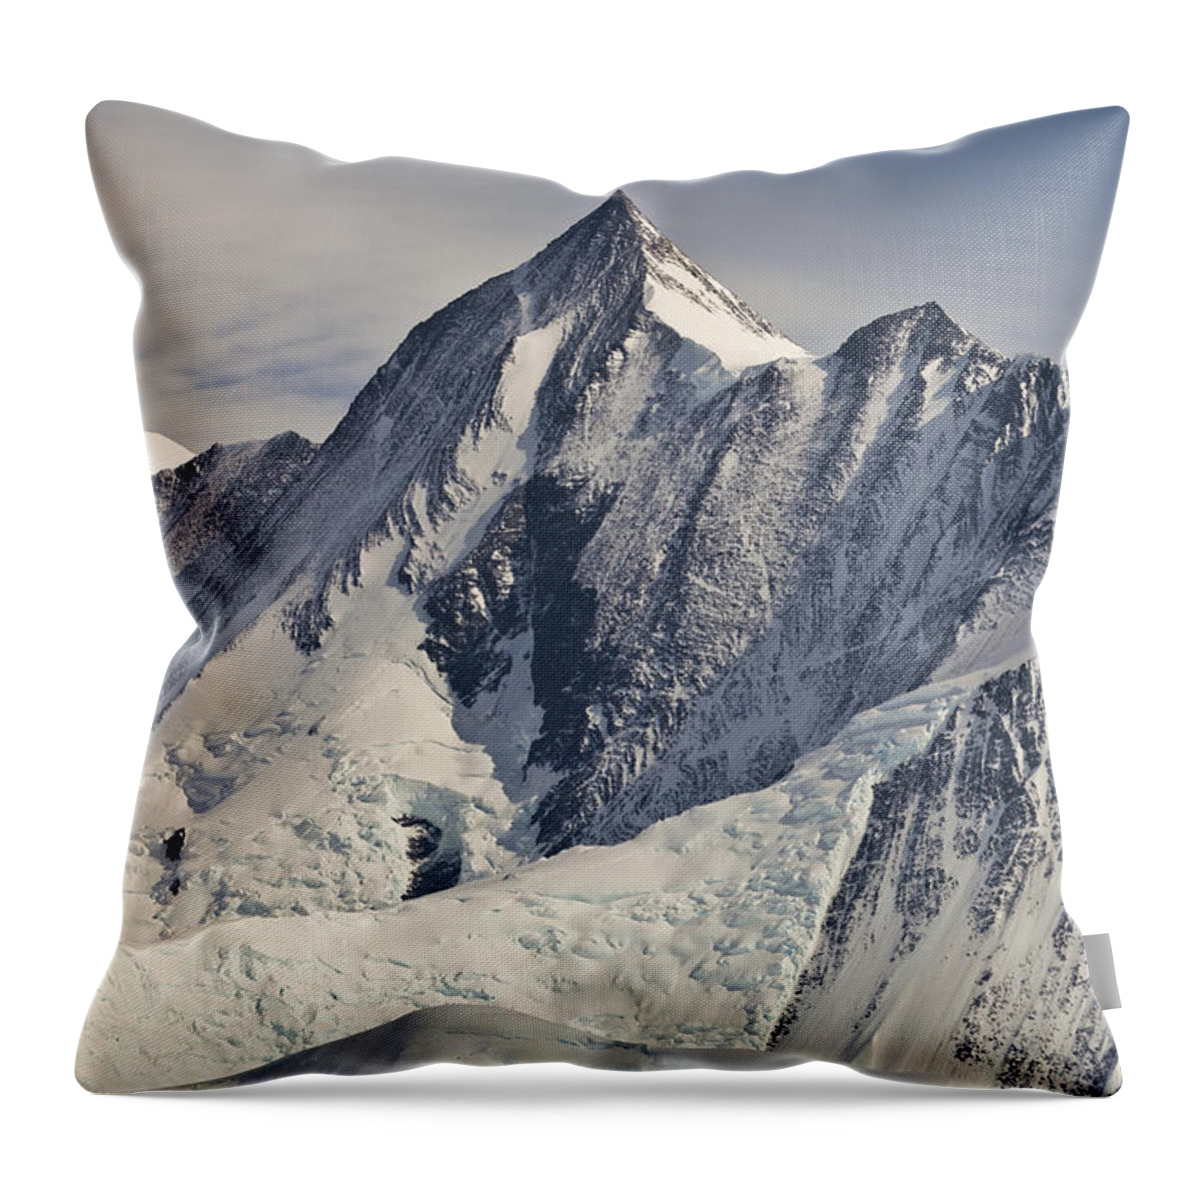 00427980 Throw Pillow featuring the photograph Mount Herschel Above Cape Hallett by Colin Monteath